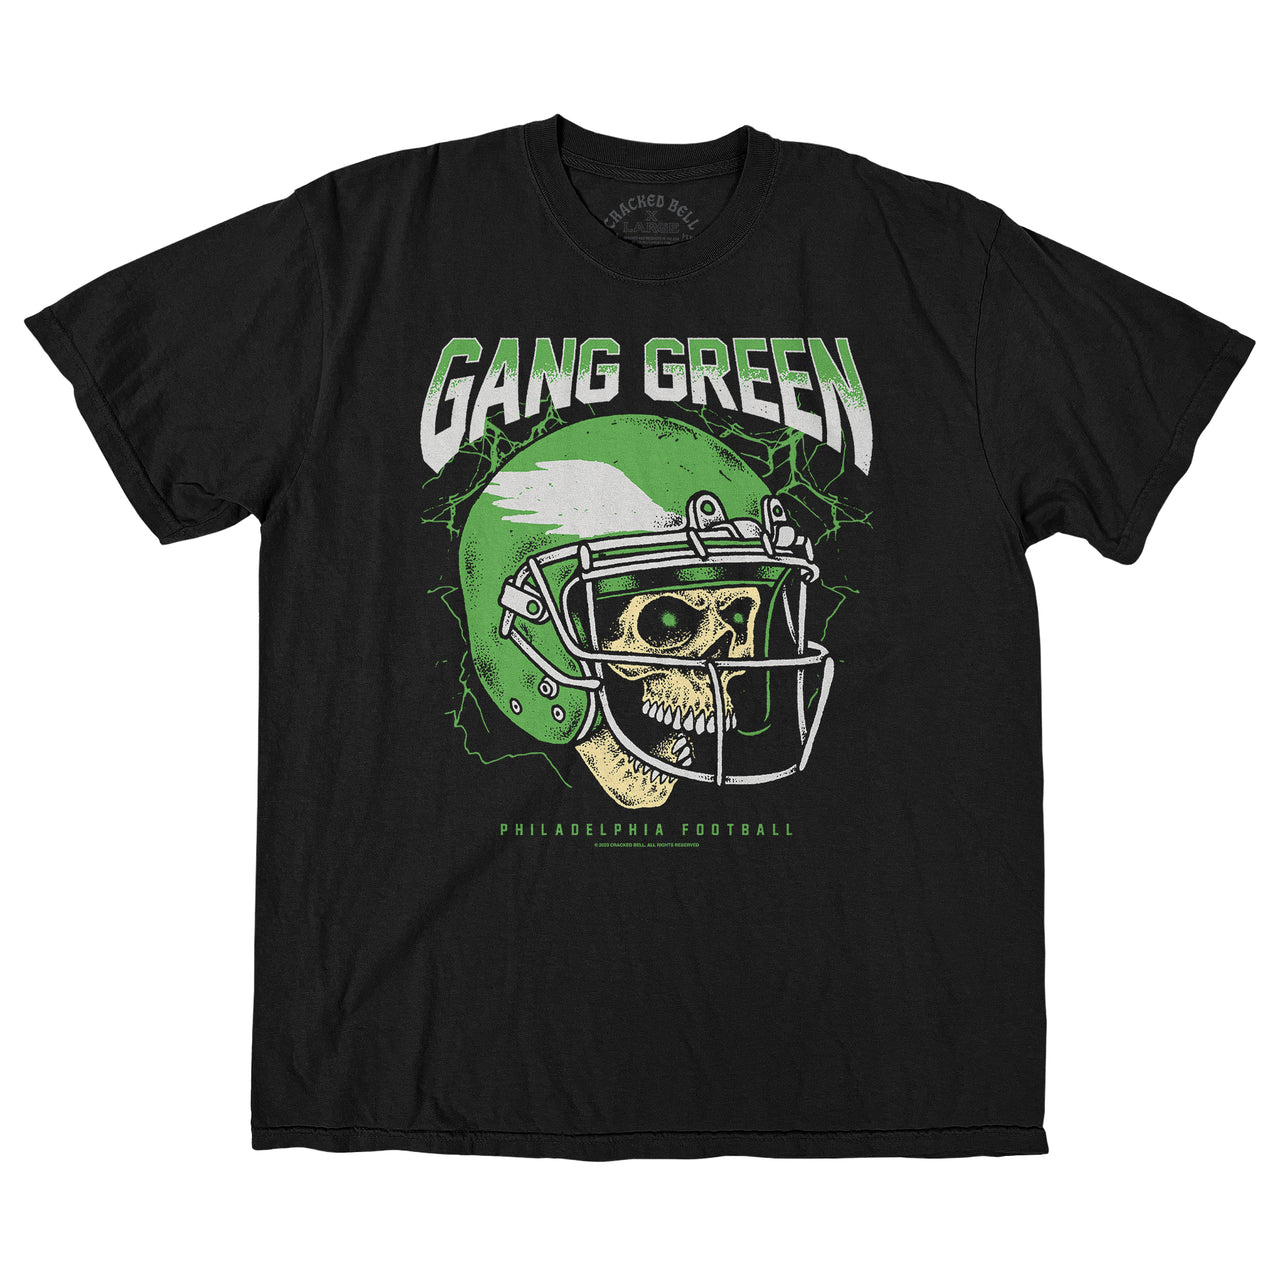 "Gang Green" Shirt